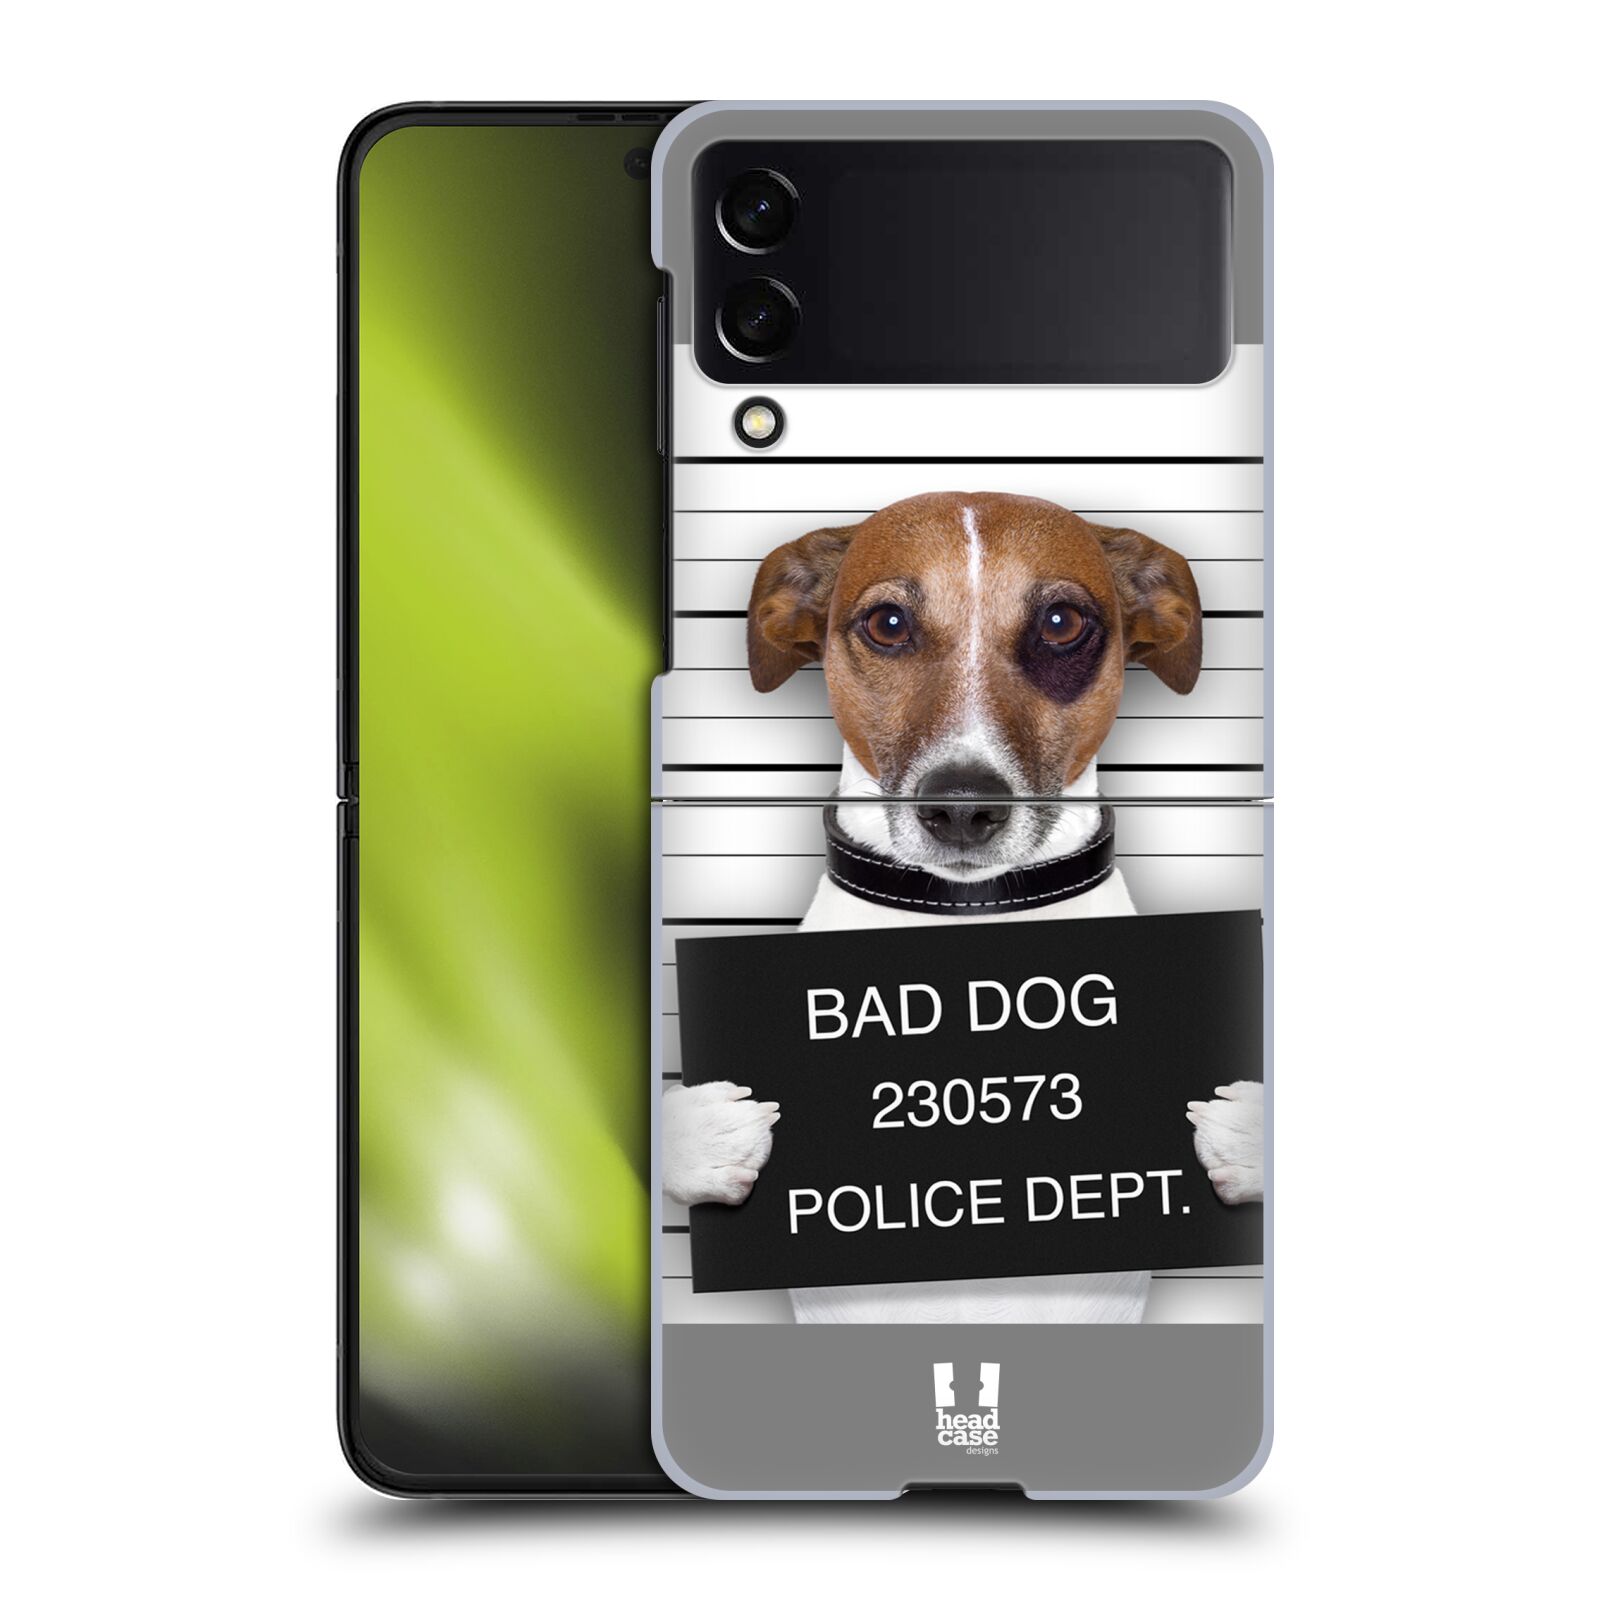 Plastový obal HEAD CASE na mobil Samsung Galaxy Z Flip 4 vzor Legrační zvířátka pejsek na policii